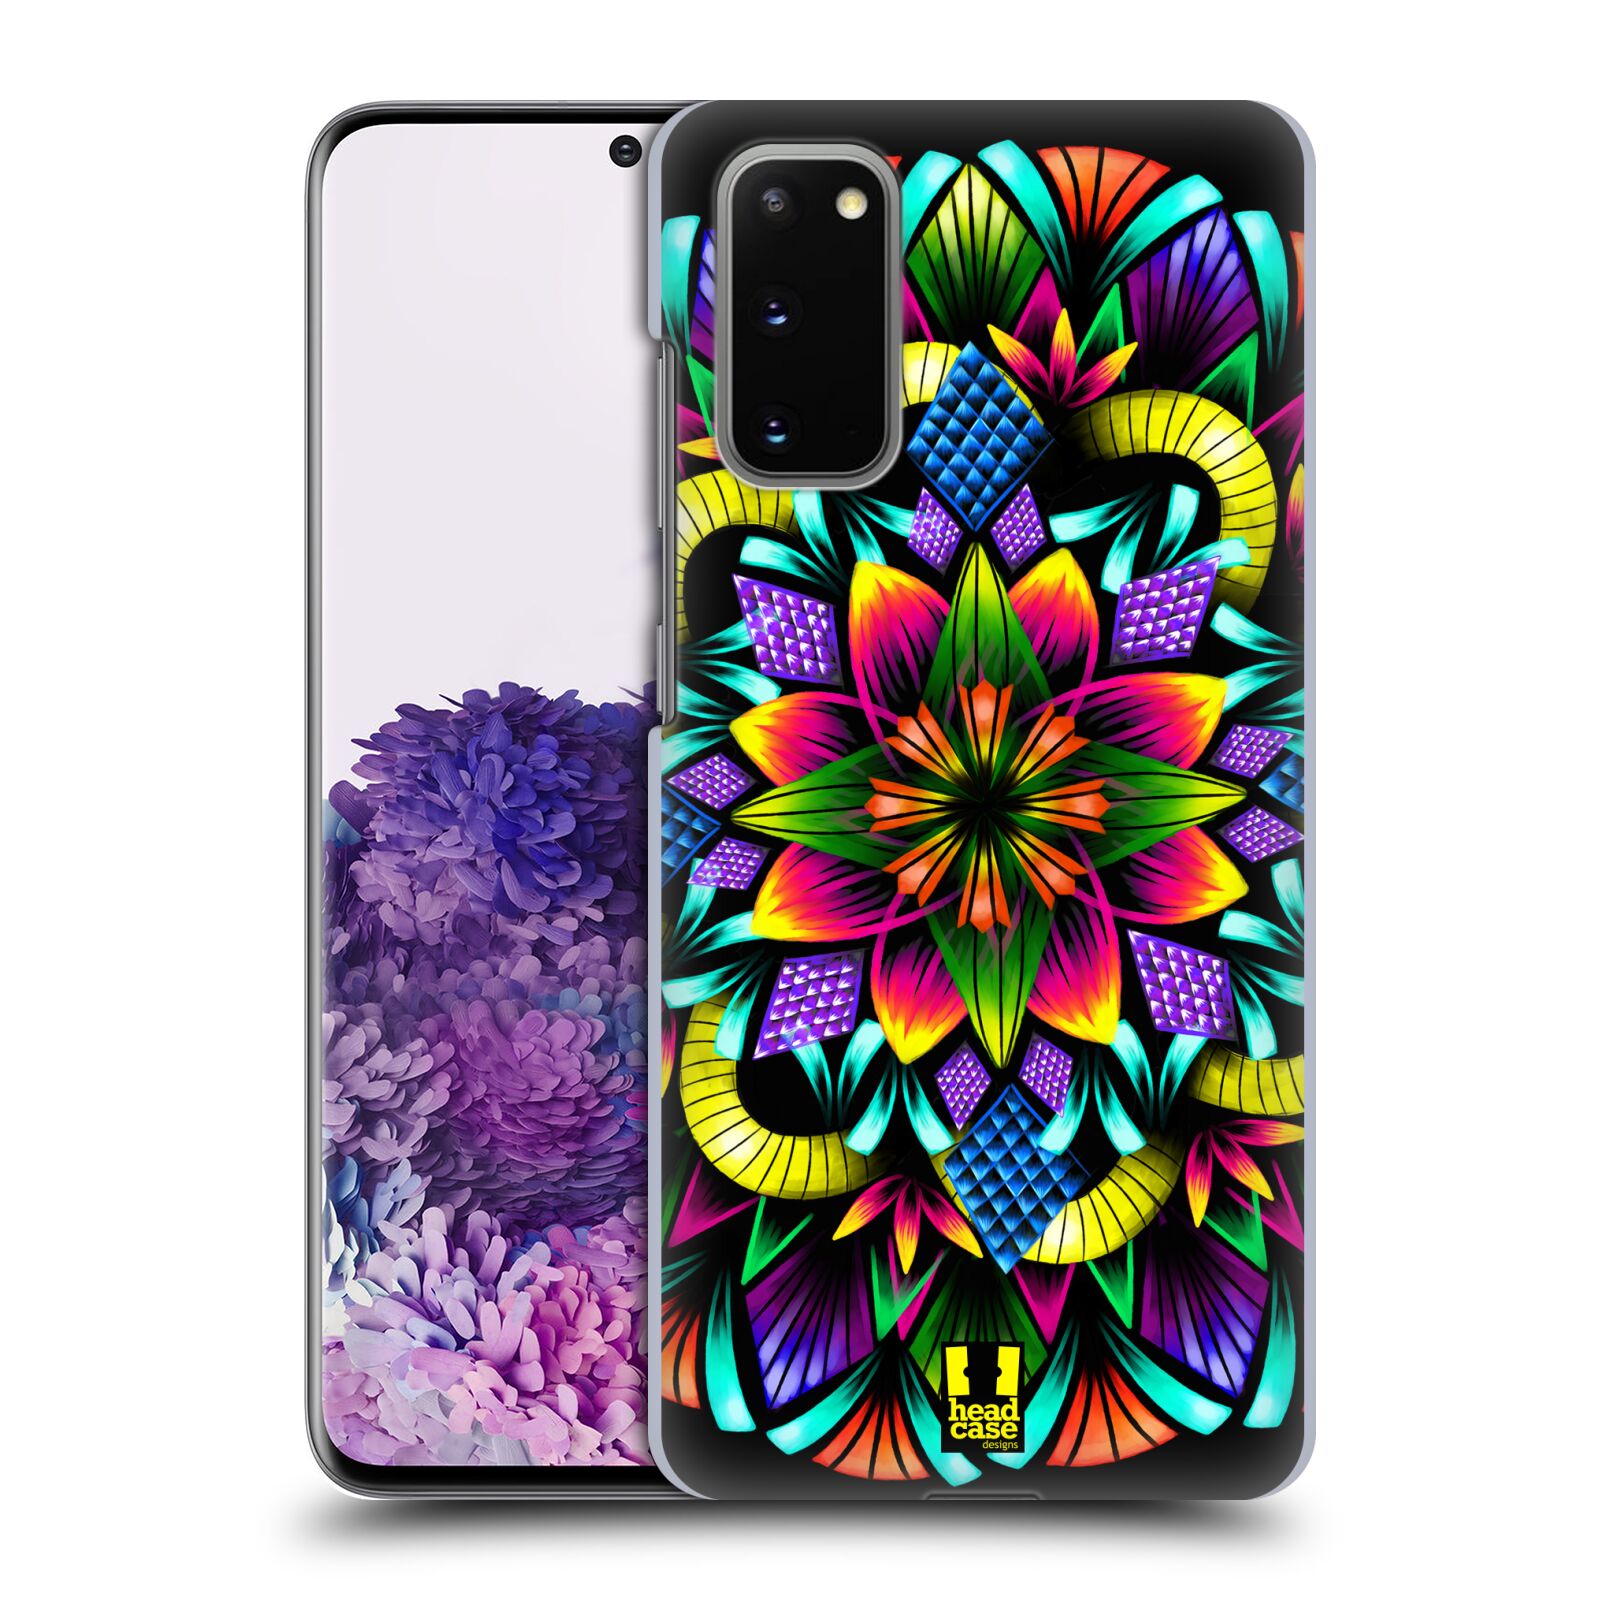 Pouzdro na mobil Samsung Galaxy S20 - HEAD CASE - vzor Indie Mandala kaleidoskop barevný vzor KVĚTINA